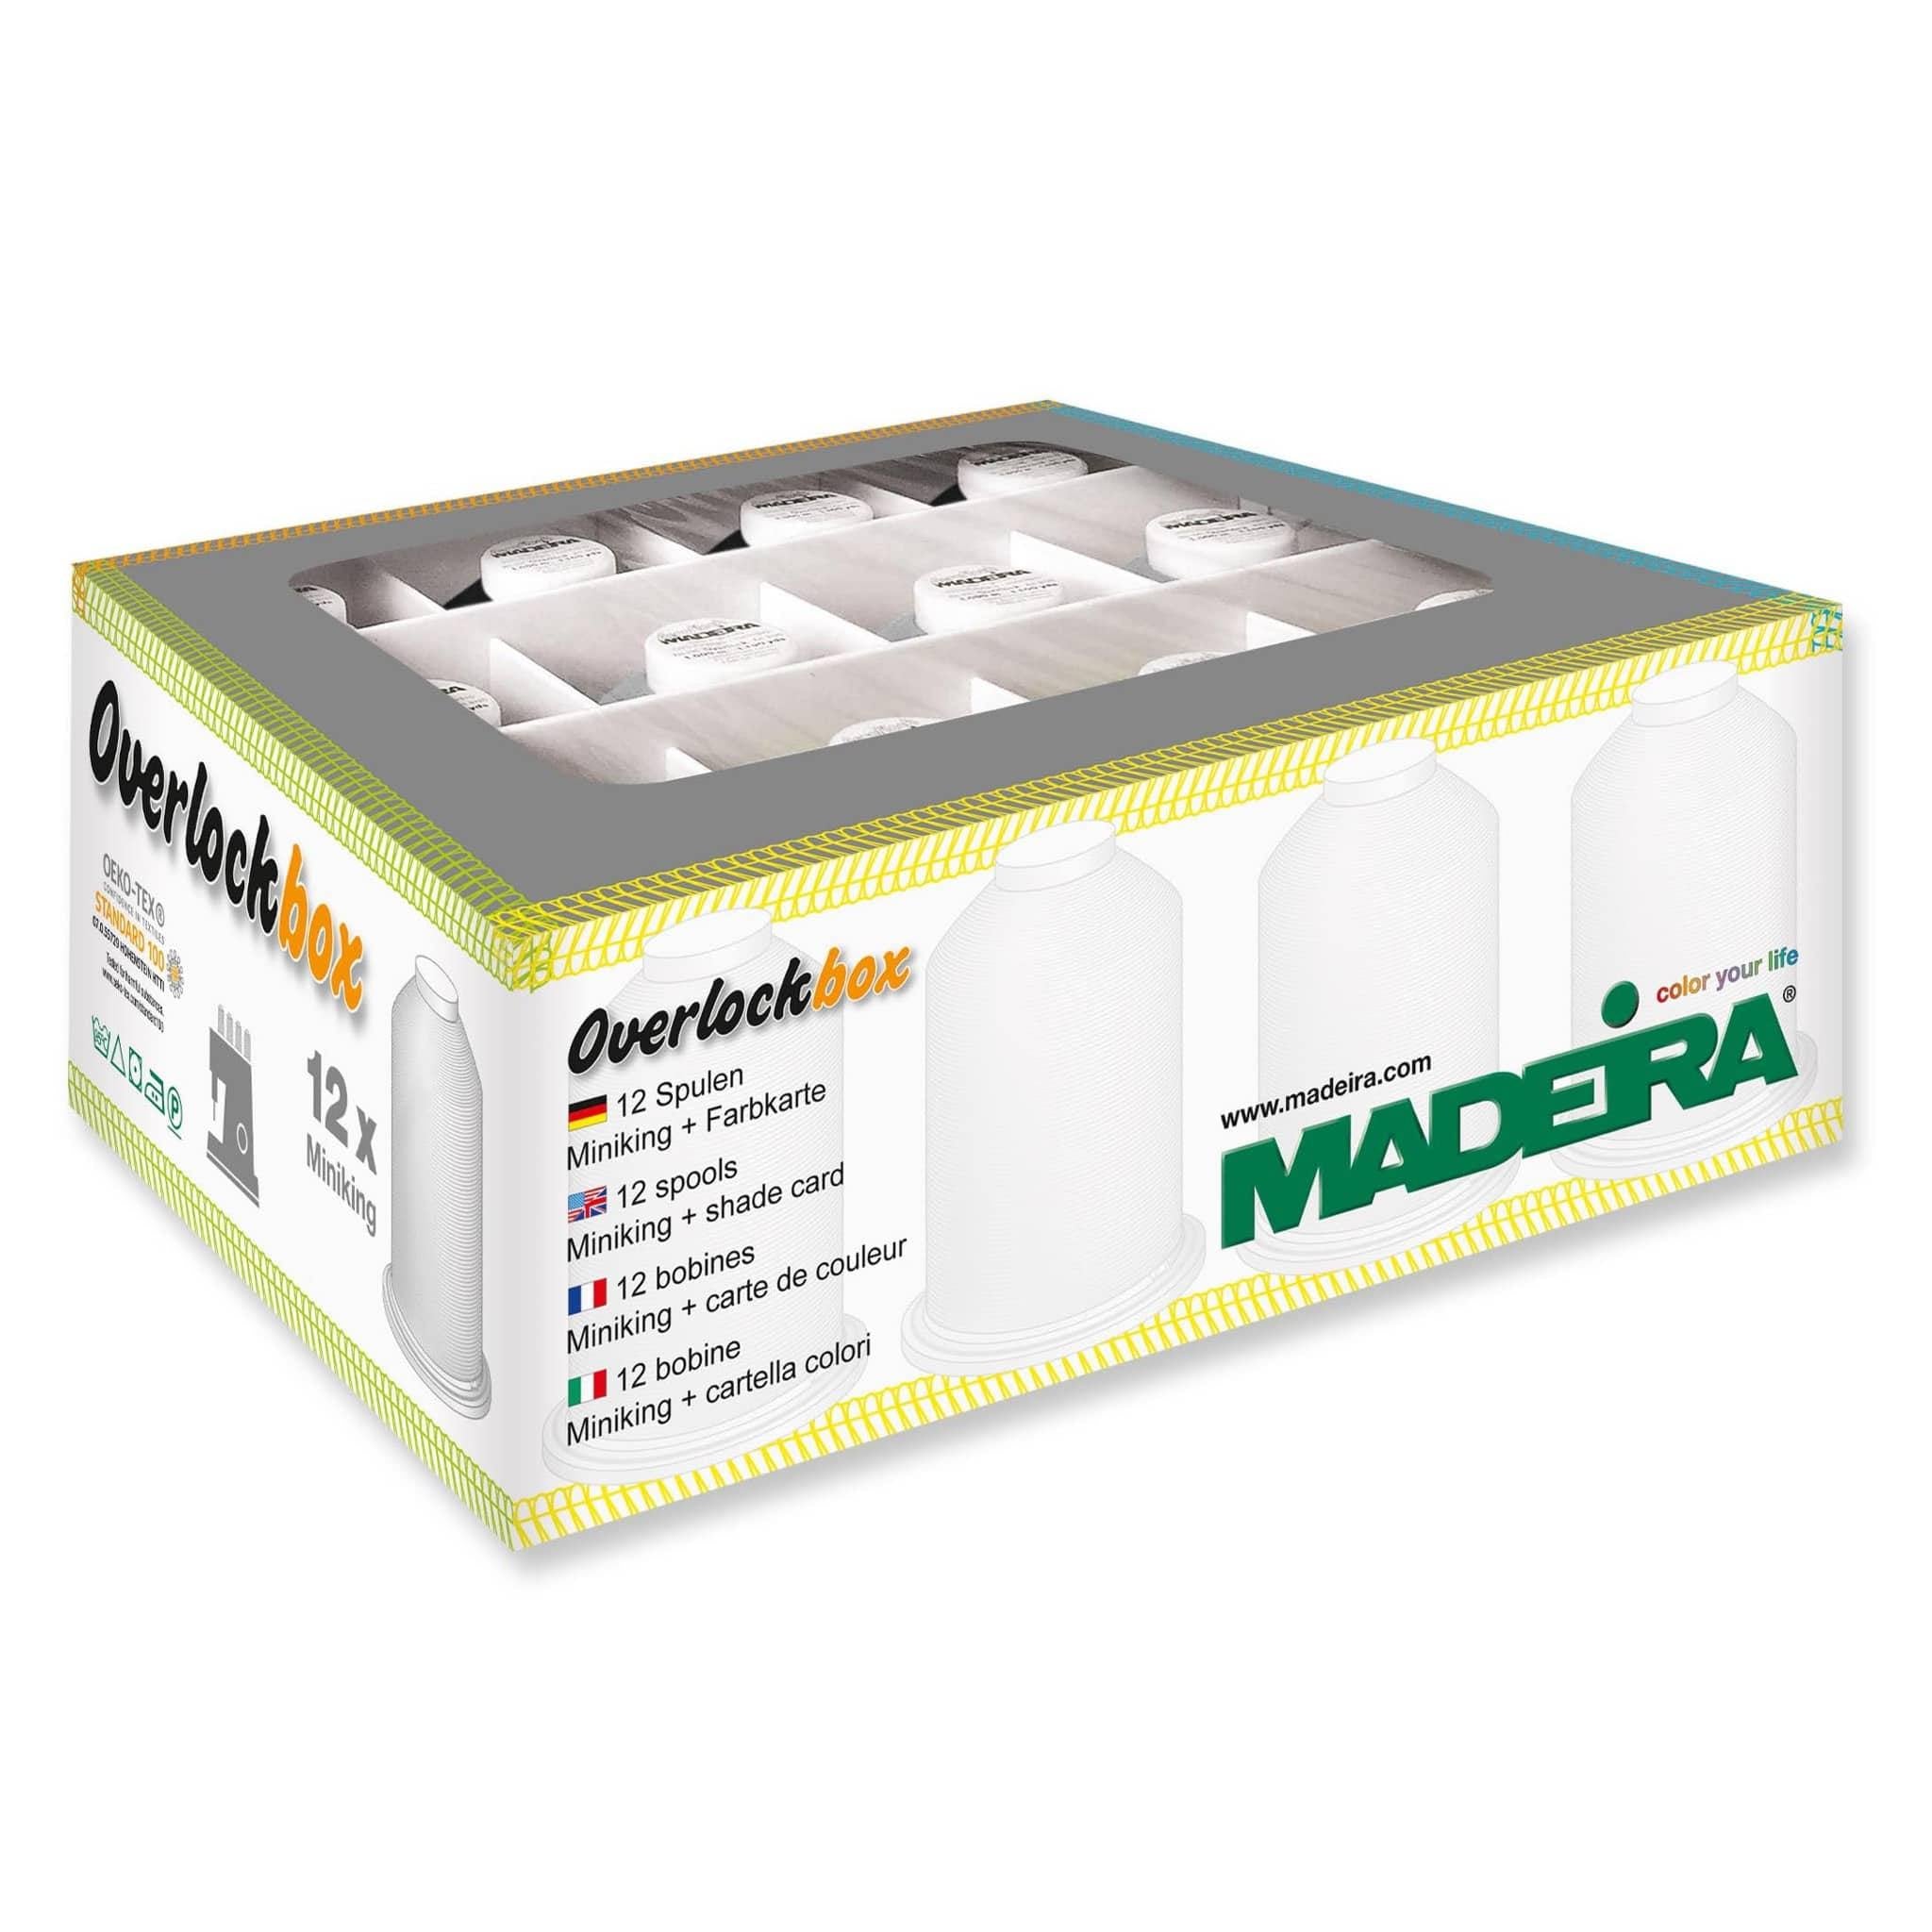 Madeira Box Aerolock and Aeroflock: Overlock Thread: 3+1: Black & White